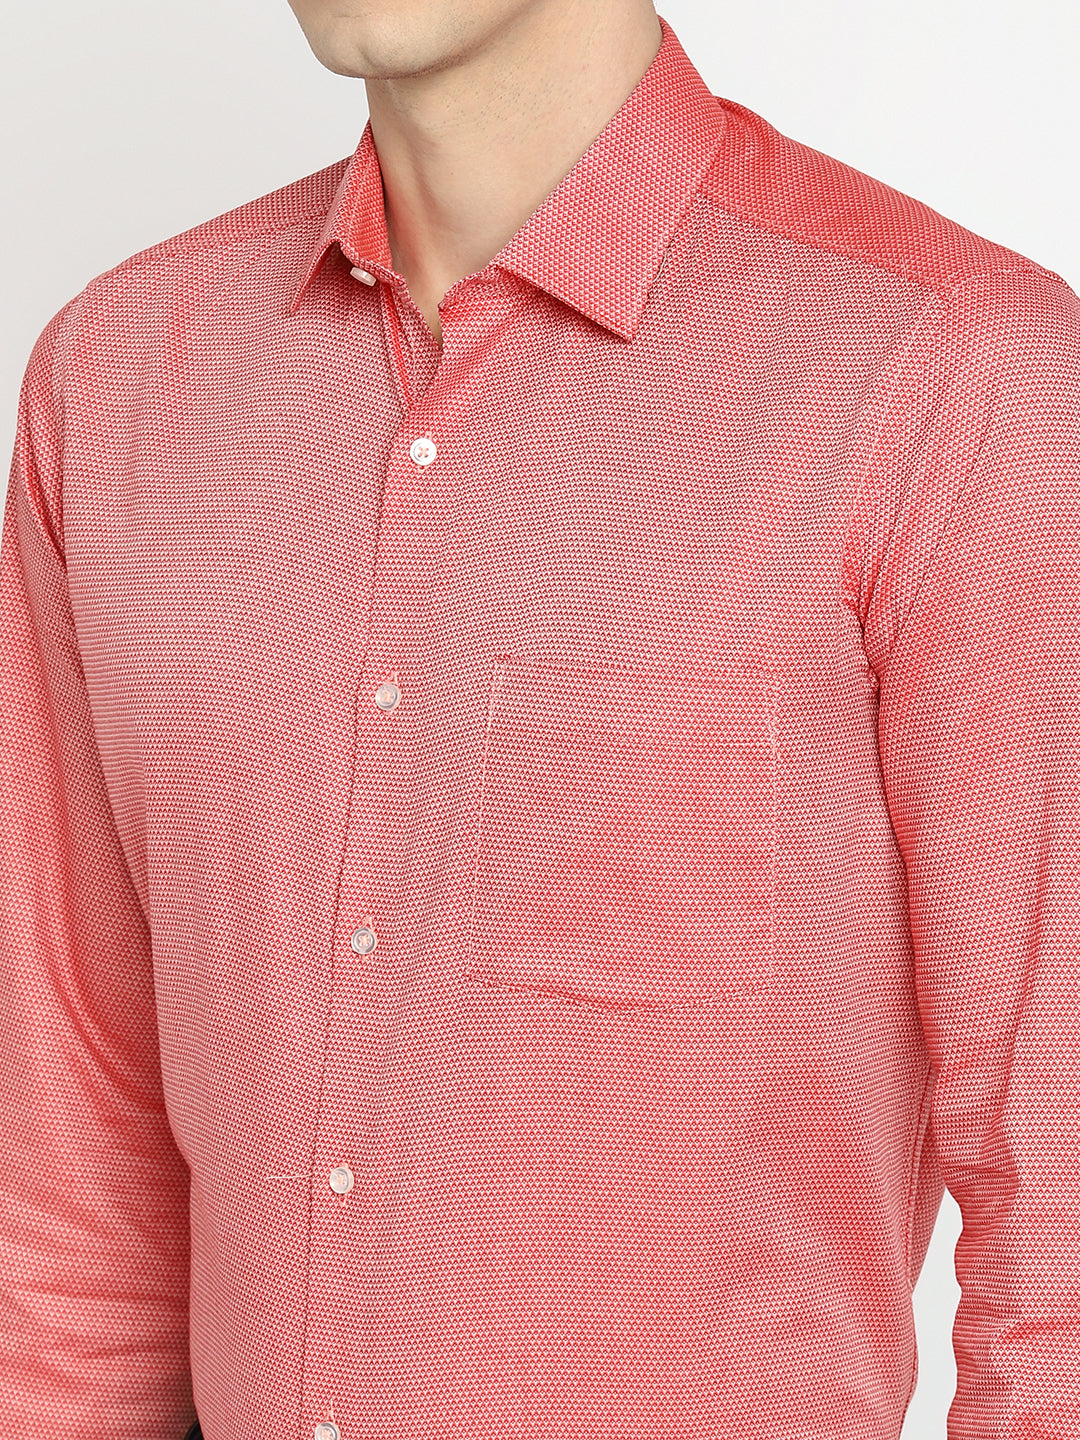 Red Cotton Self Design Slim Fit Shirts